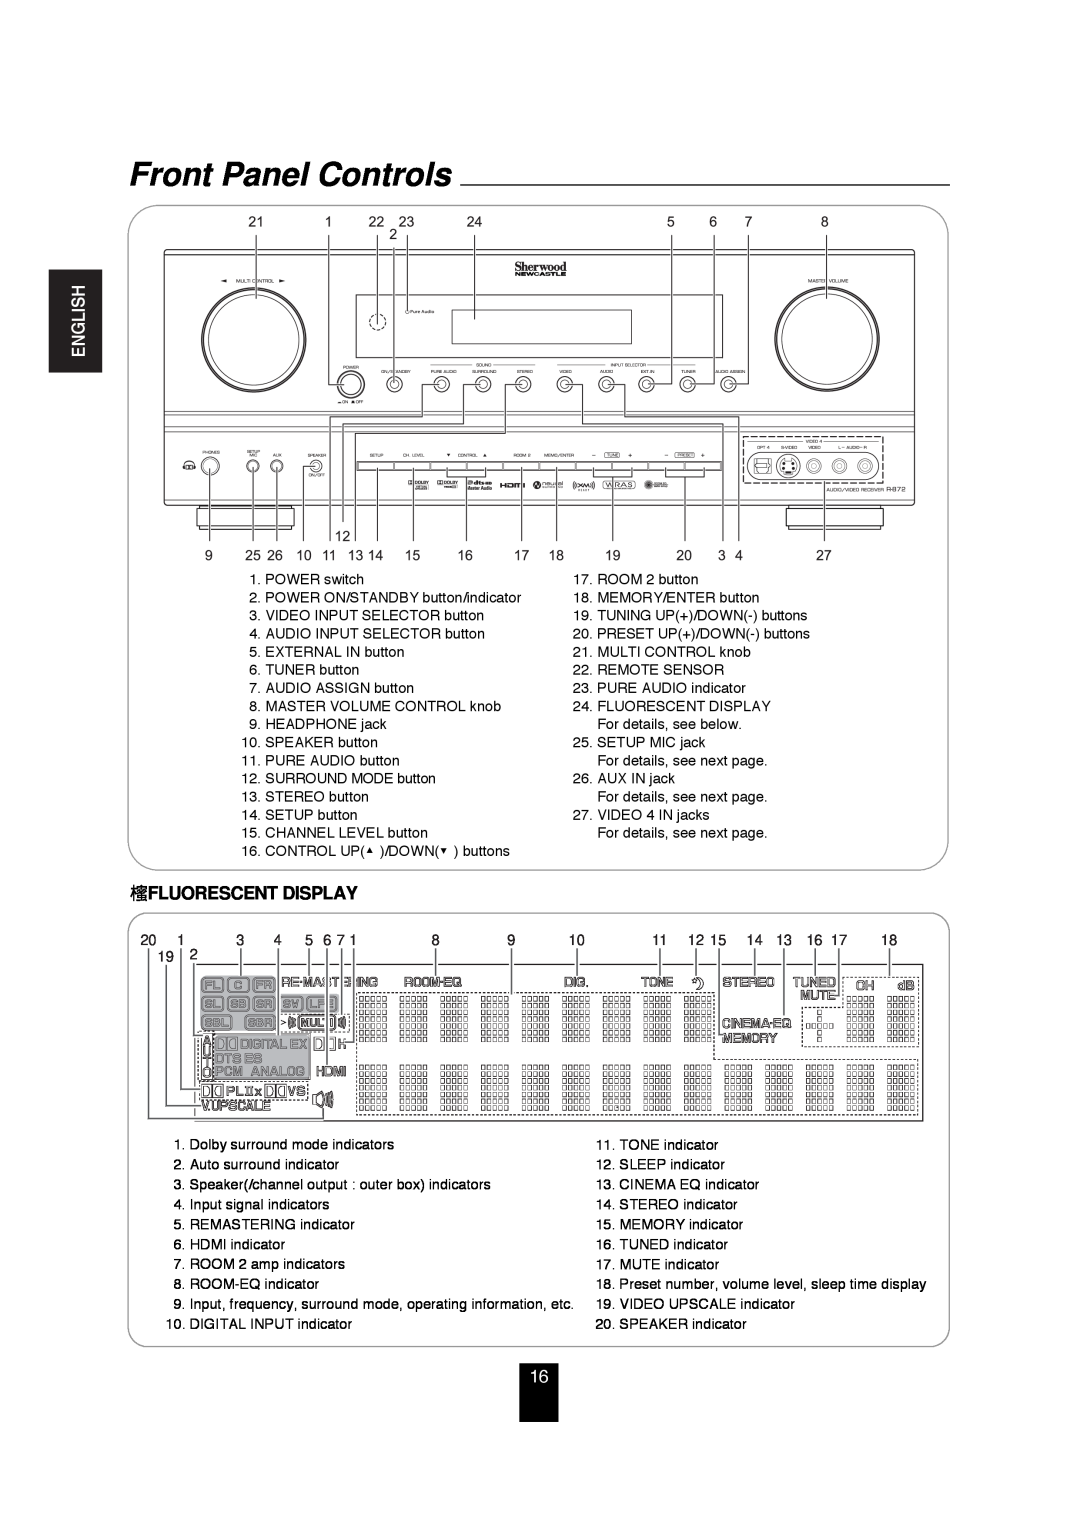 Sherwood R-872 manual Front Panel Controls, Fluorescent Display, English 